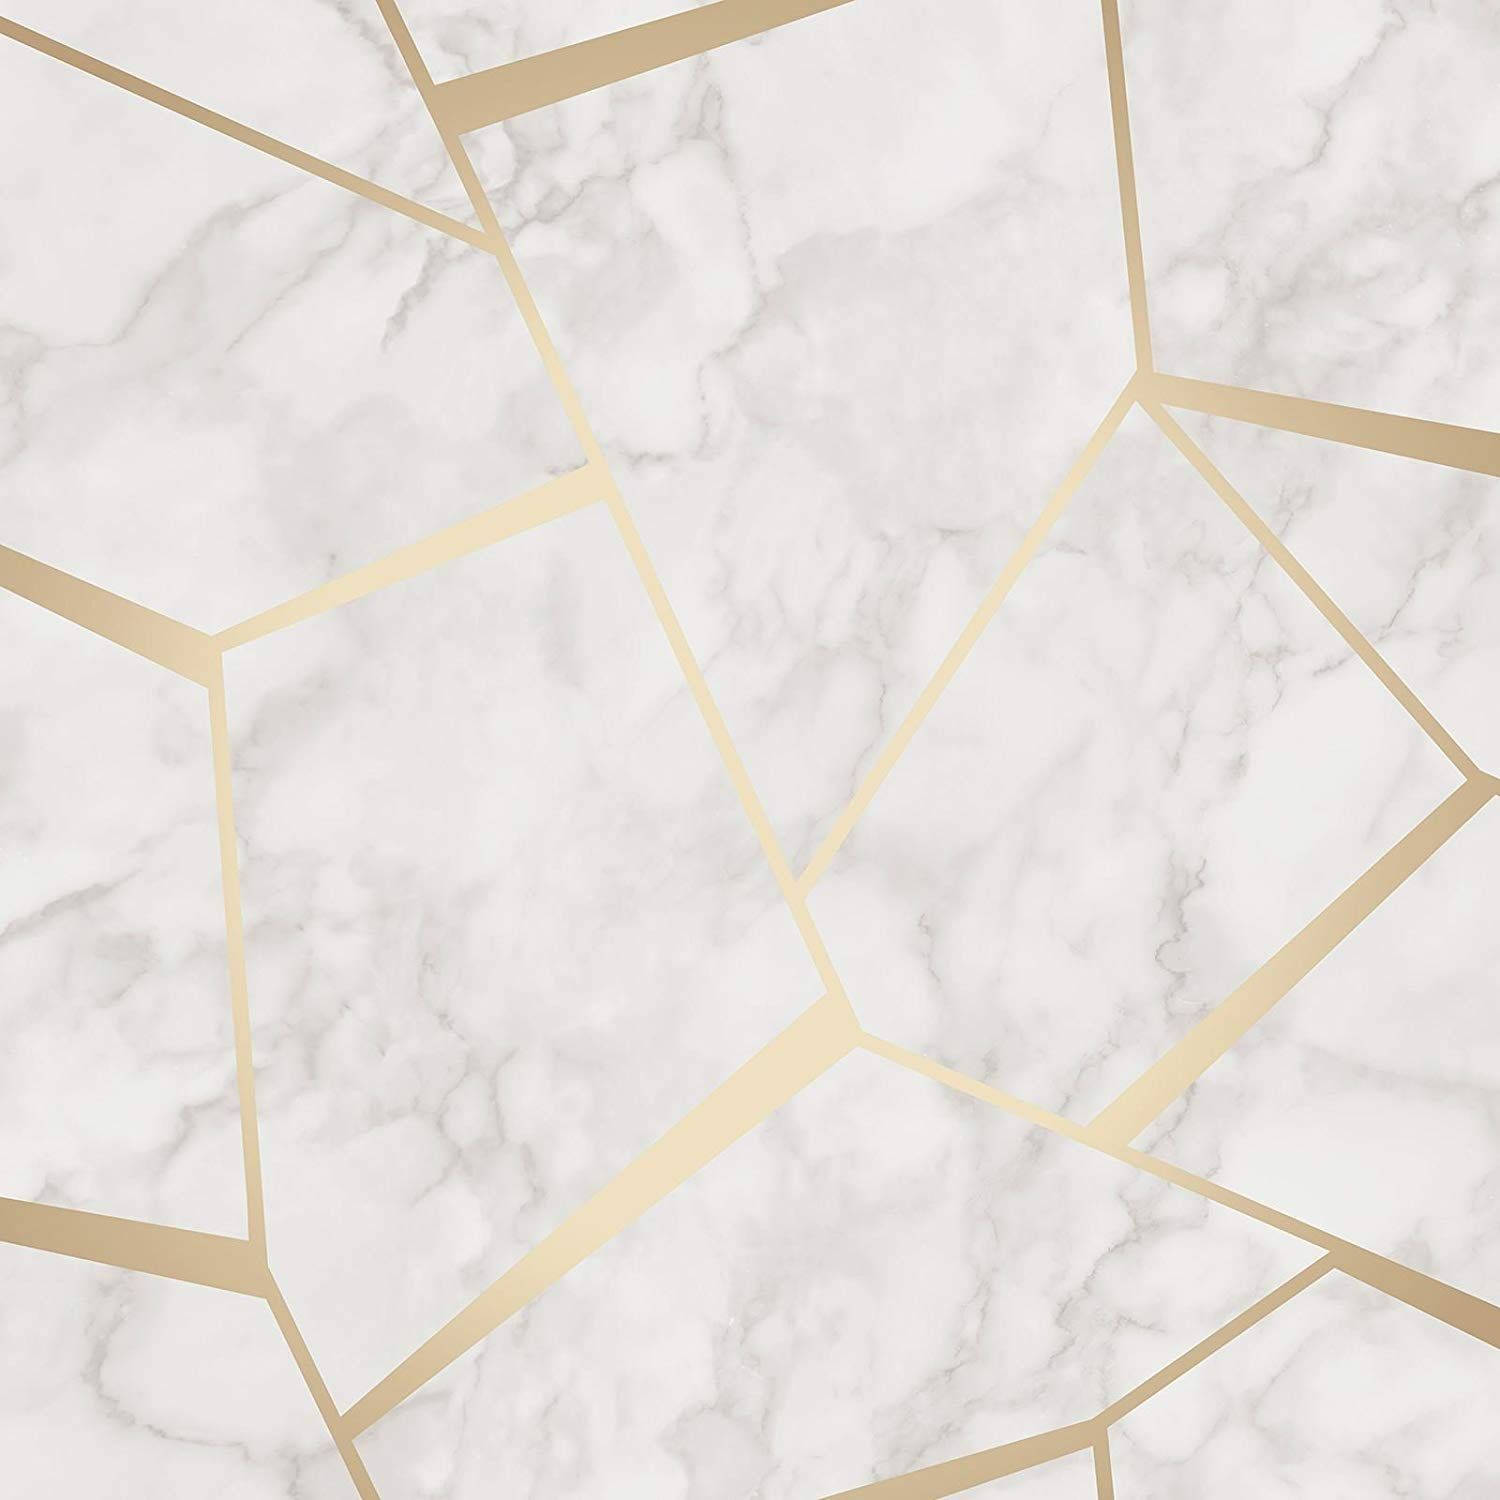 Geometric Design On White Marble Wallpaper